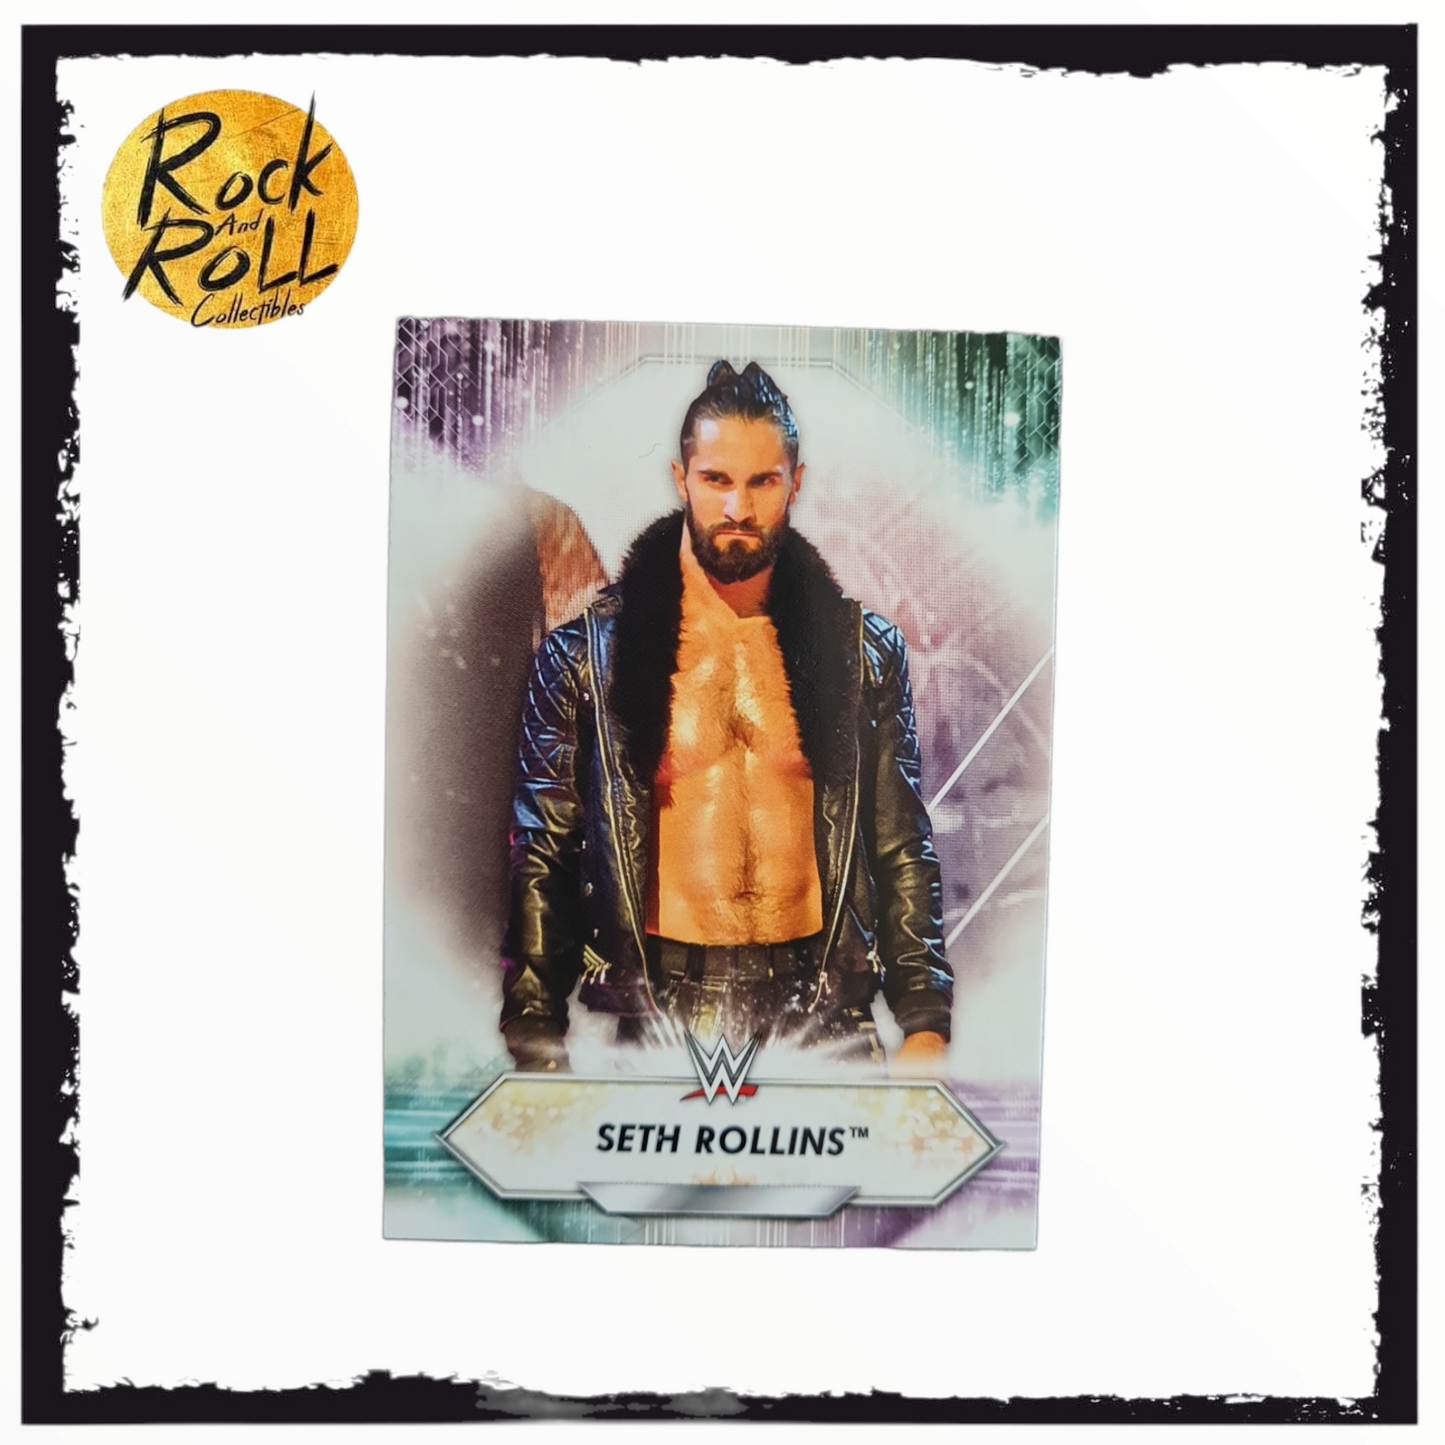 2021 Topps WWE Base Card #164 - Seth Rollins